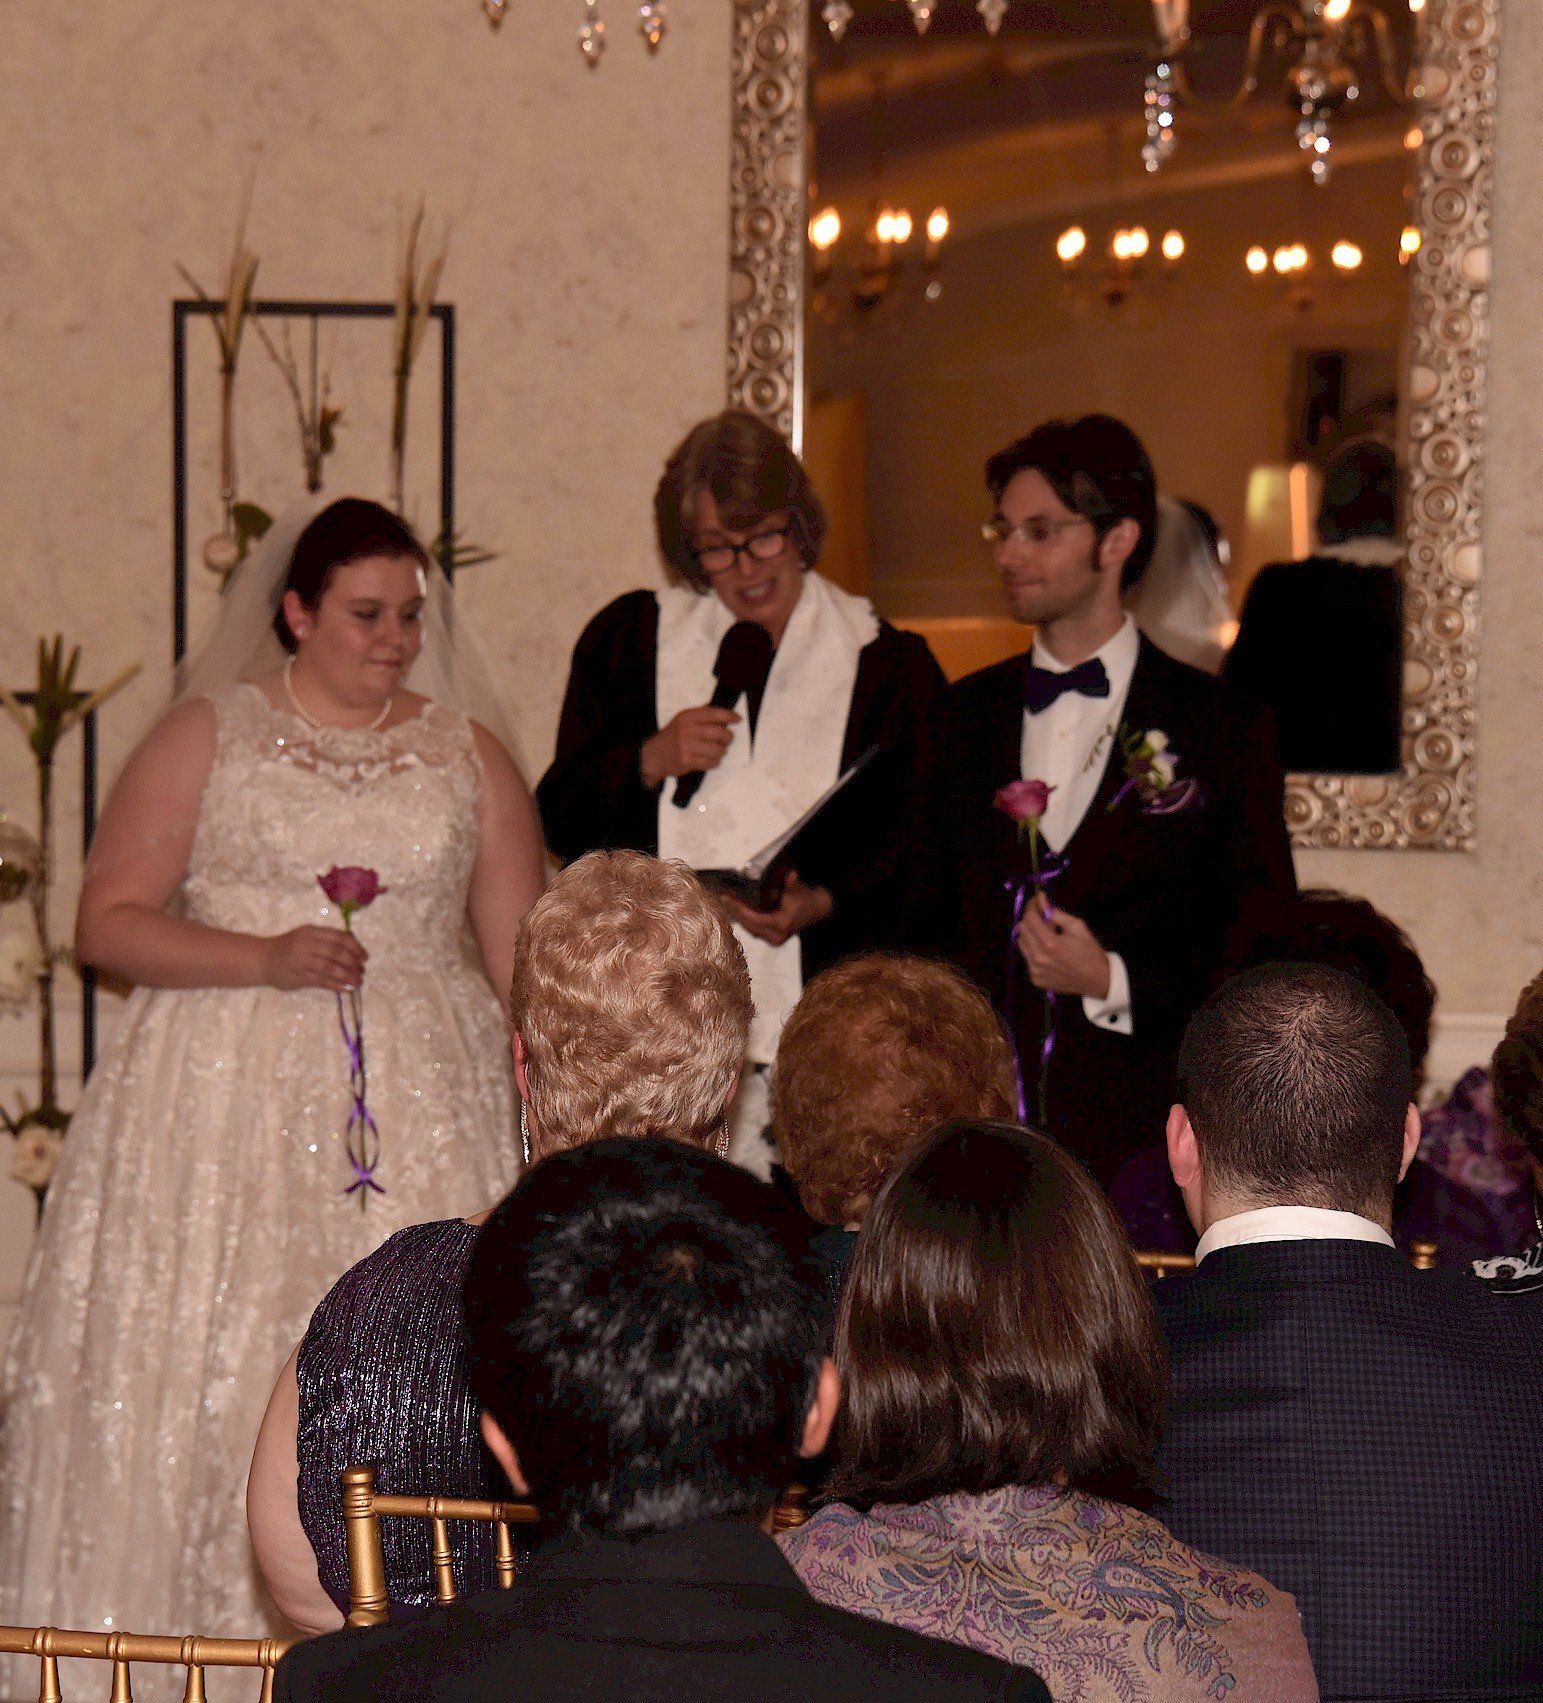 MA wedding ceremony at The Essex Room, Essex, Massachusetts